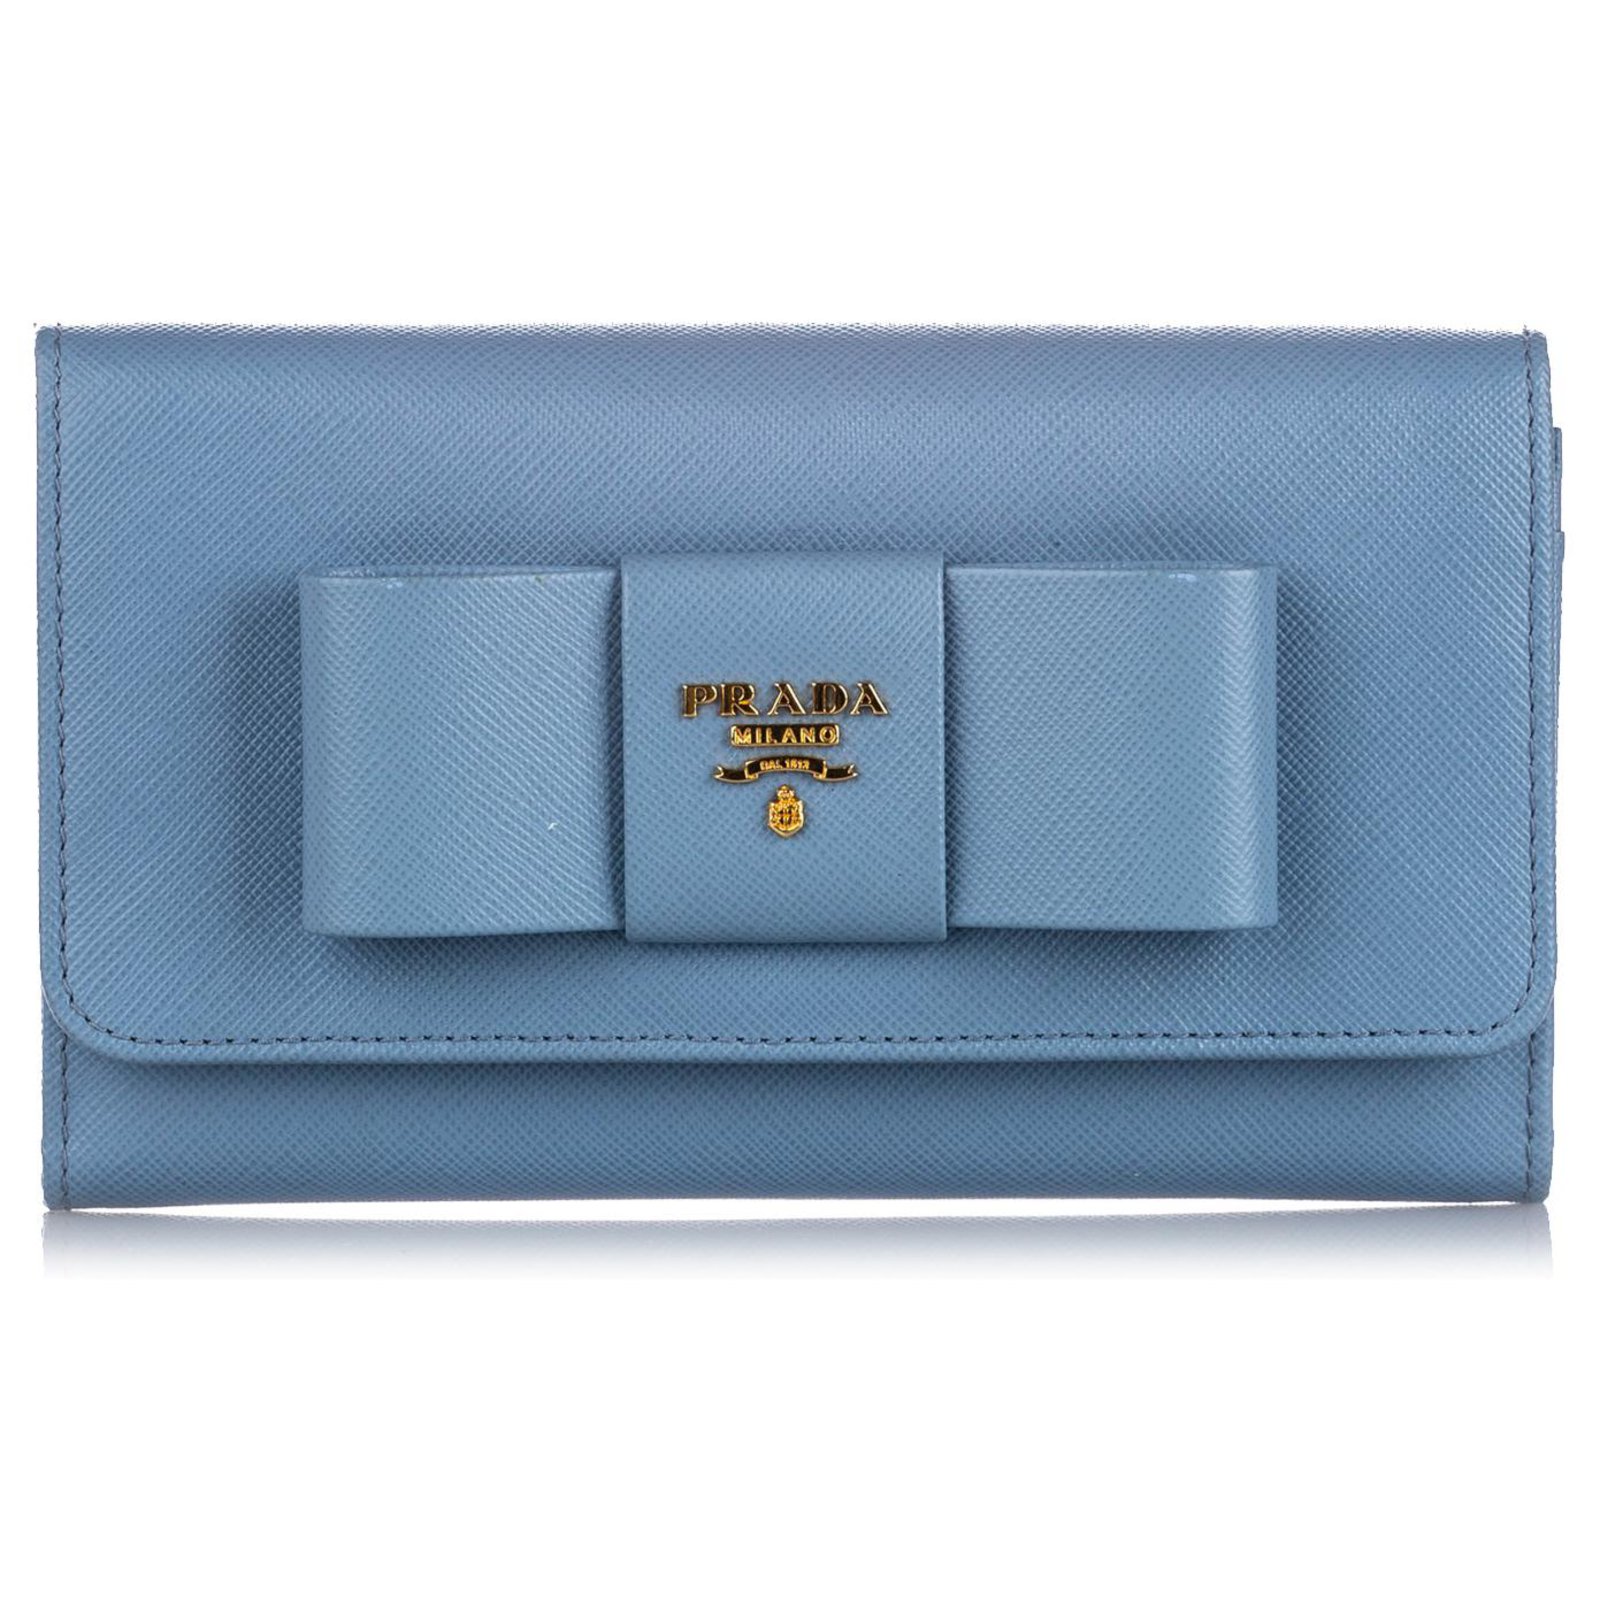 Prada, Bags, Prada Saffiano Leather Lux Bow Wallet